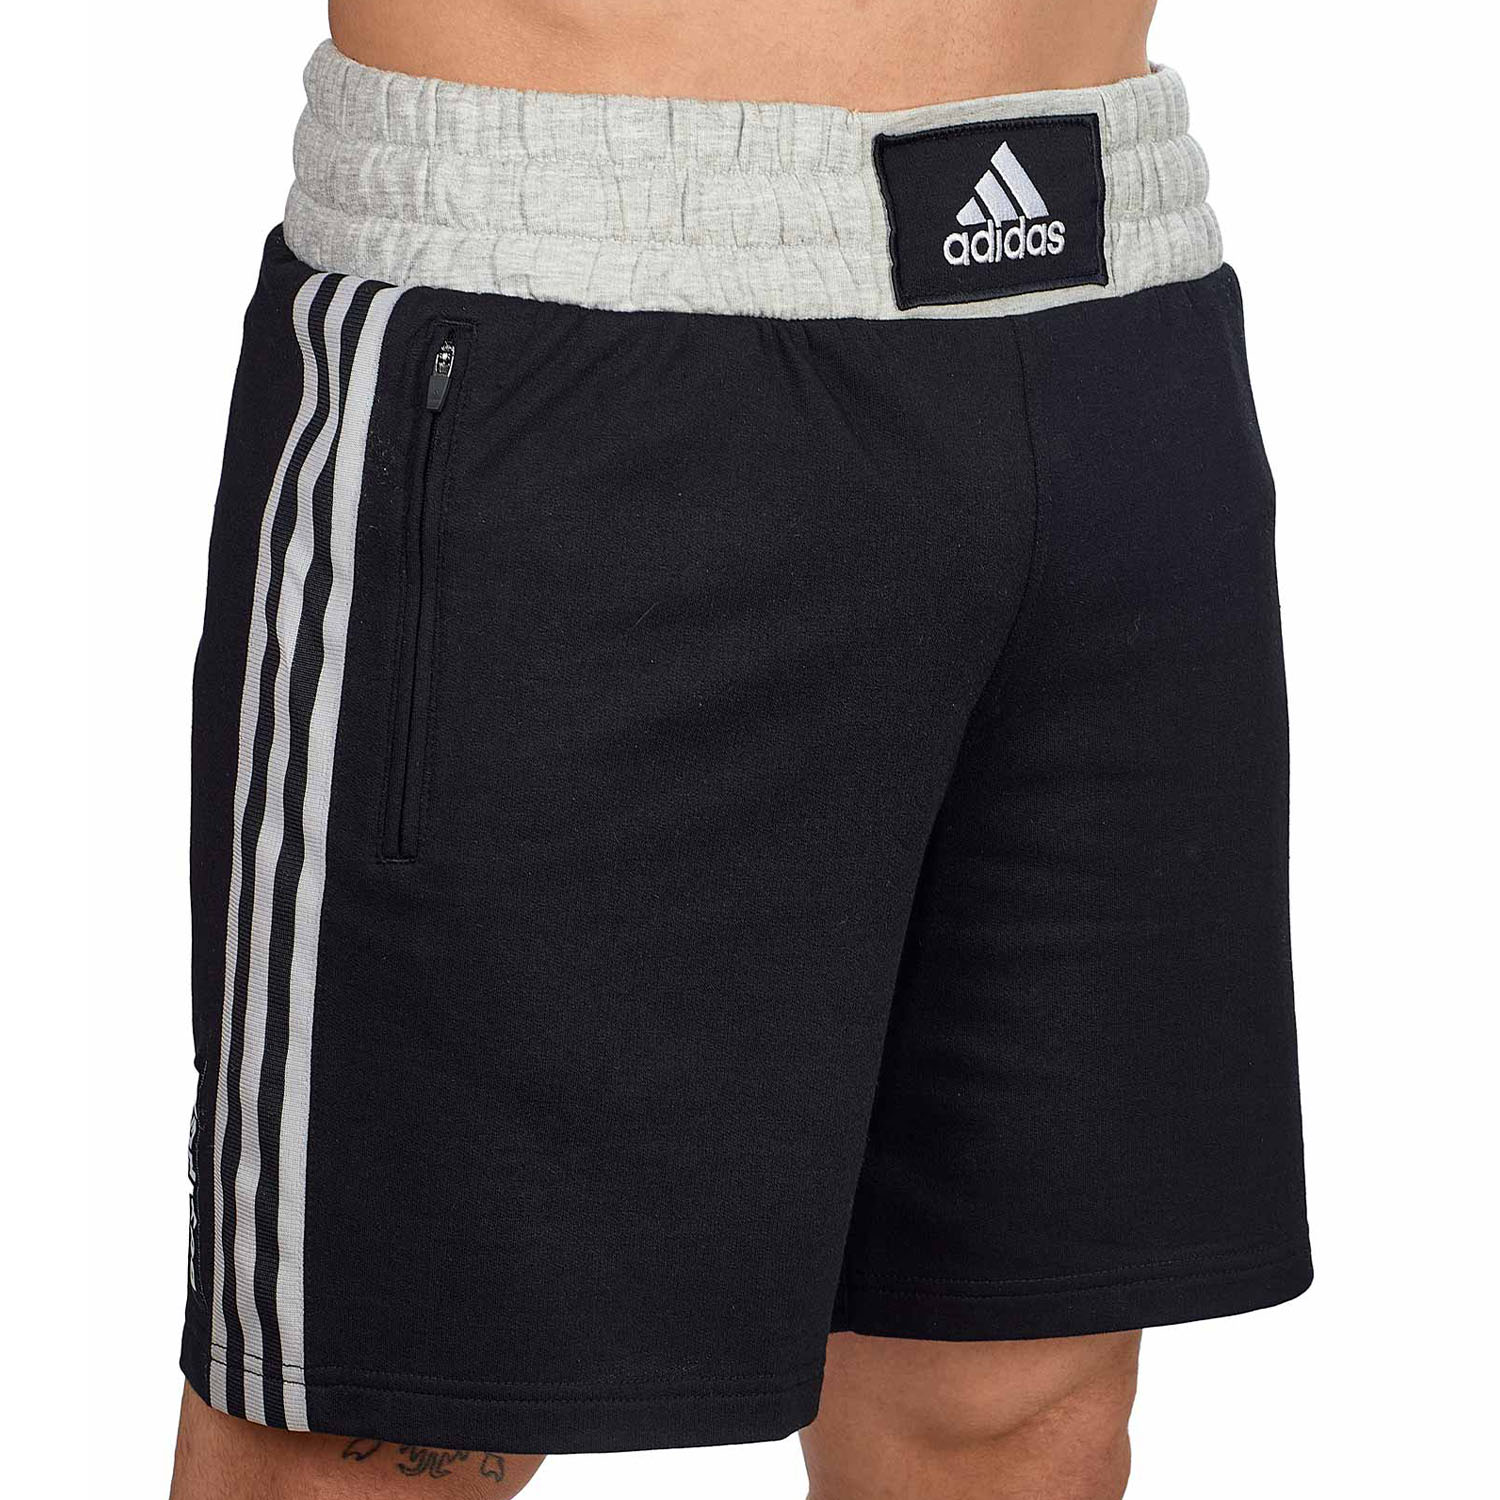 adidas Fitness Shorts, Boxwear Traditional, black-white